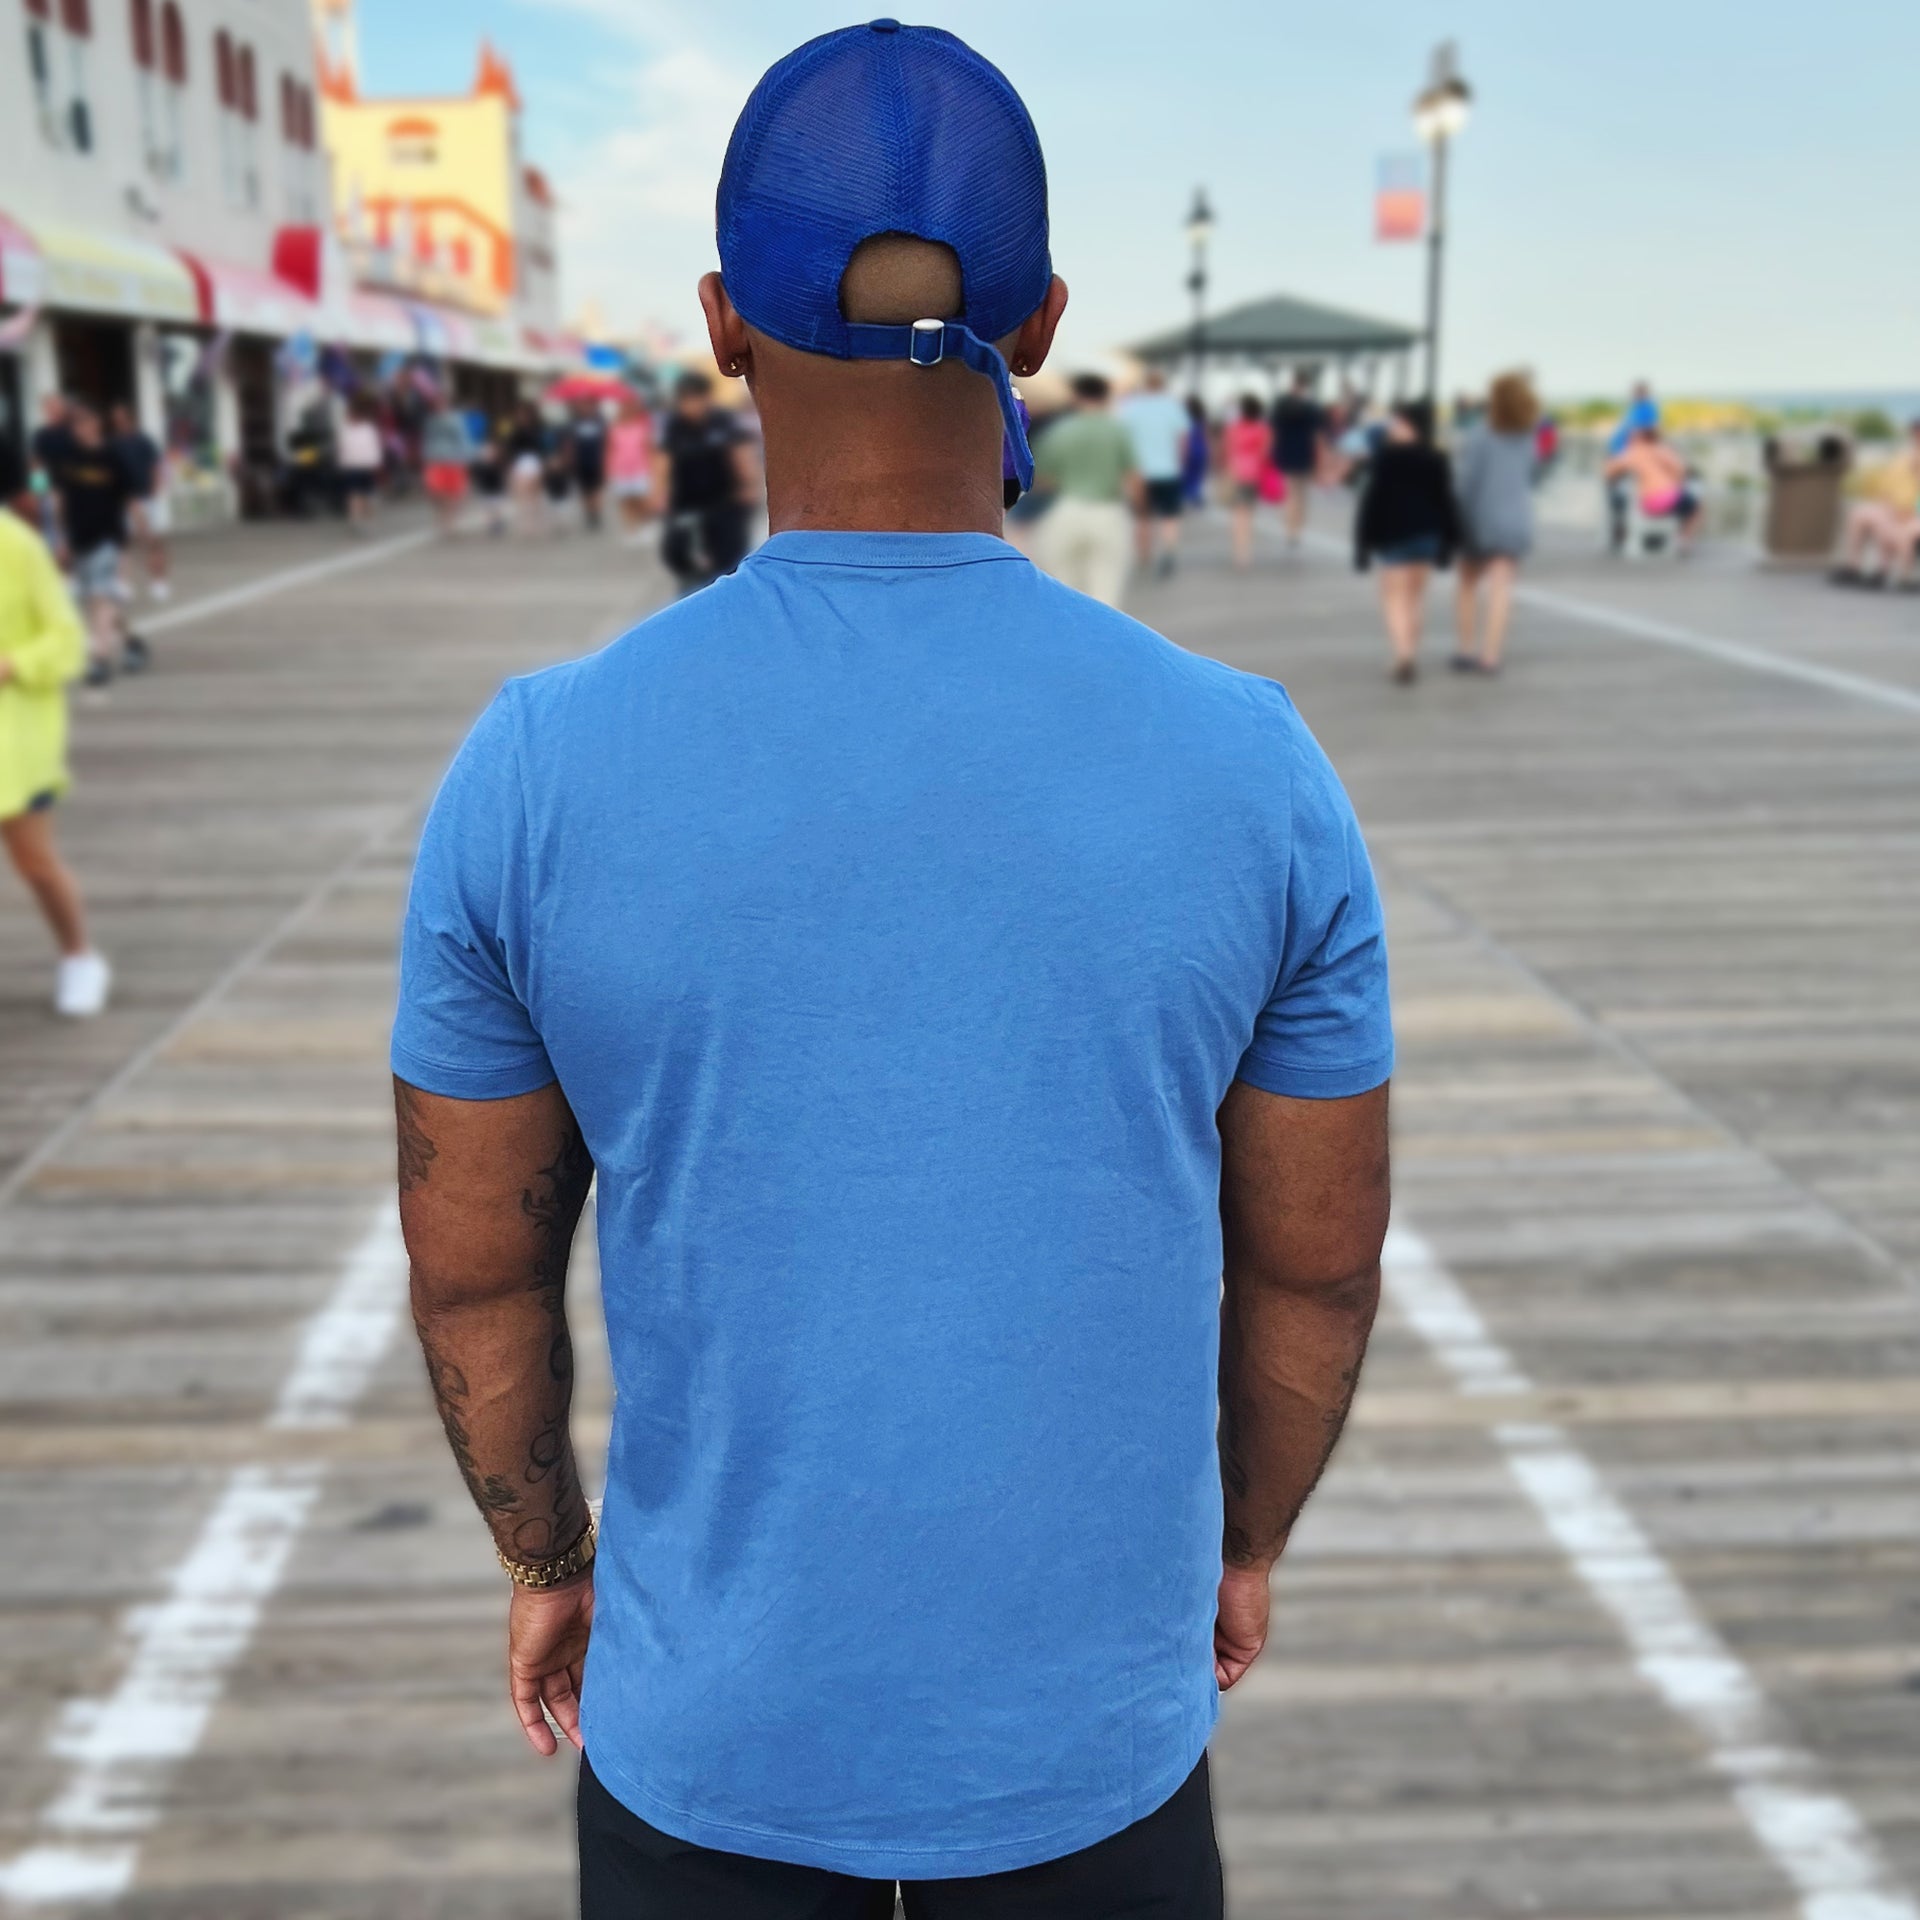 The backside of the New York Mets Retrograde Franklin New York Mets Wordmark And Logo TShirt | Cadet Blue TShirt